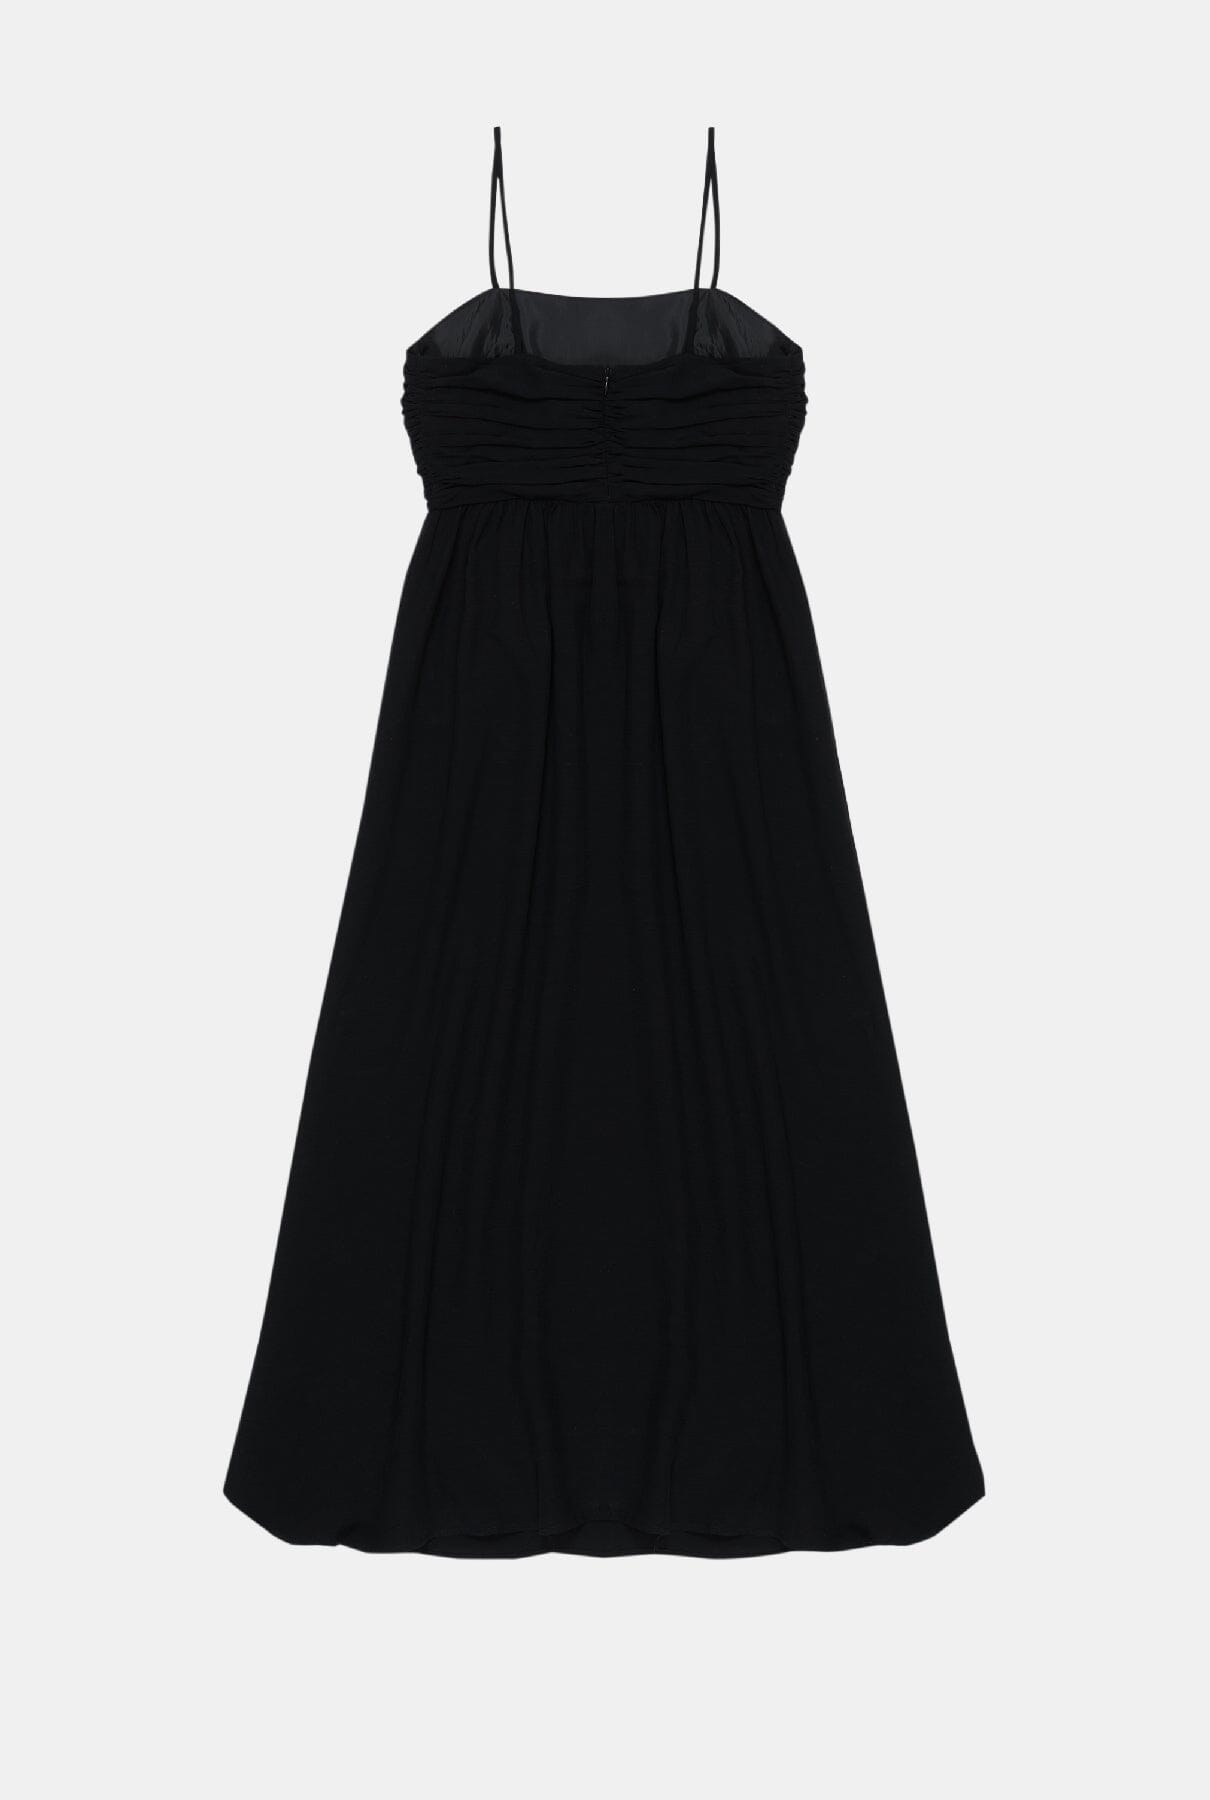 Bel-Air Woman Dress Nightfall Black Dress The New Society 